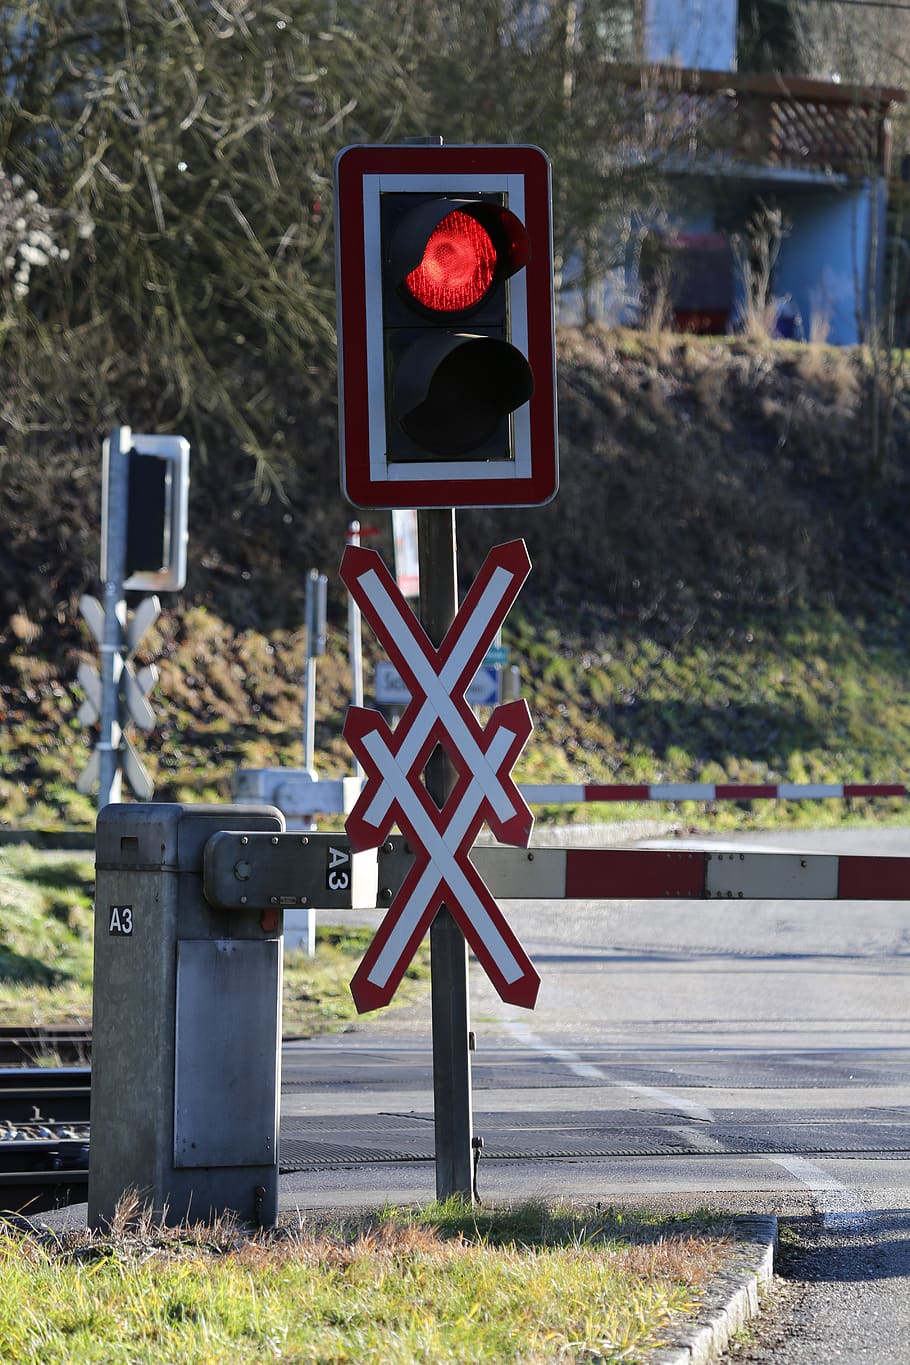 traffic lights, light, train, level crossing, traffic, red, light signal, warning light, traffic light signal, traffic signal